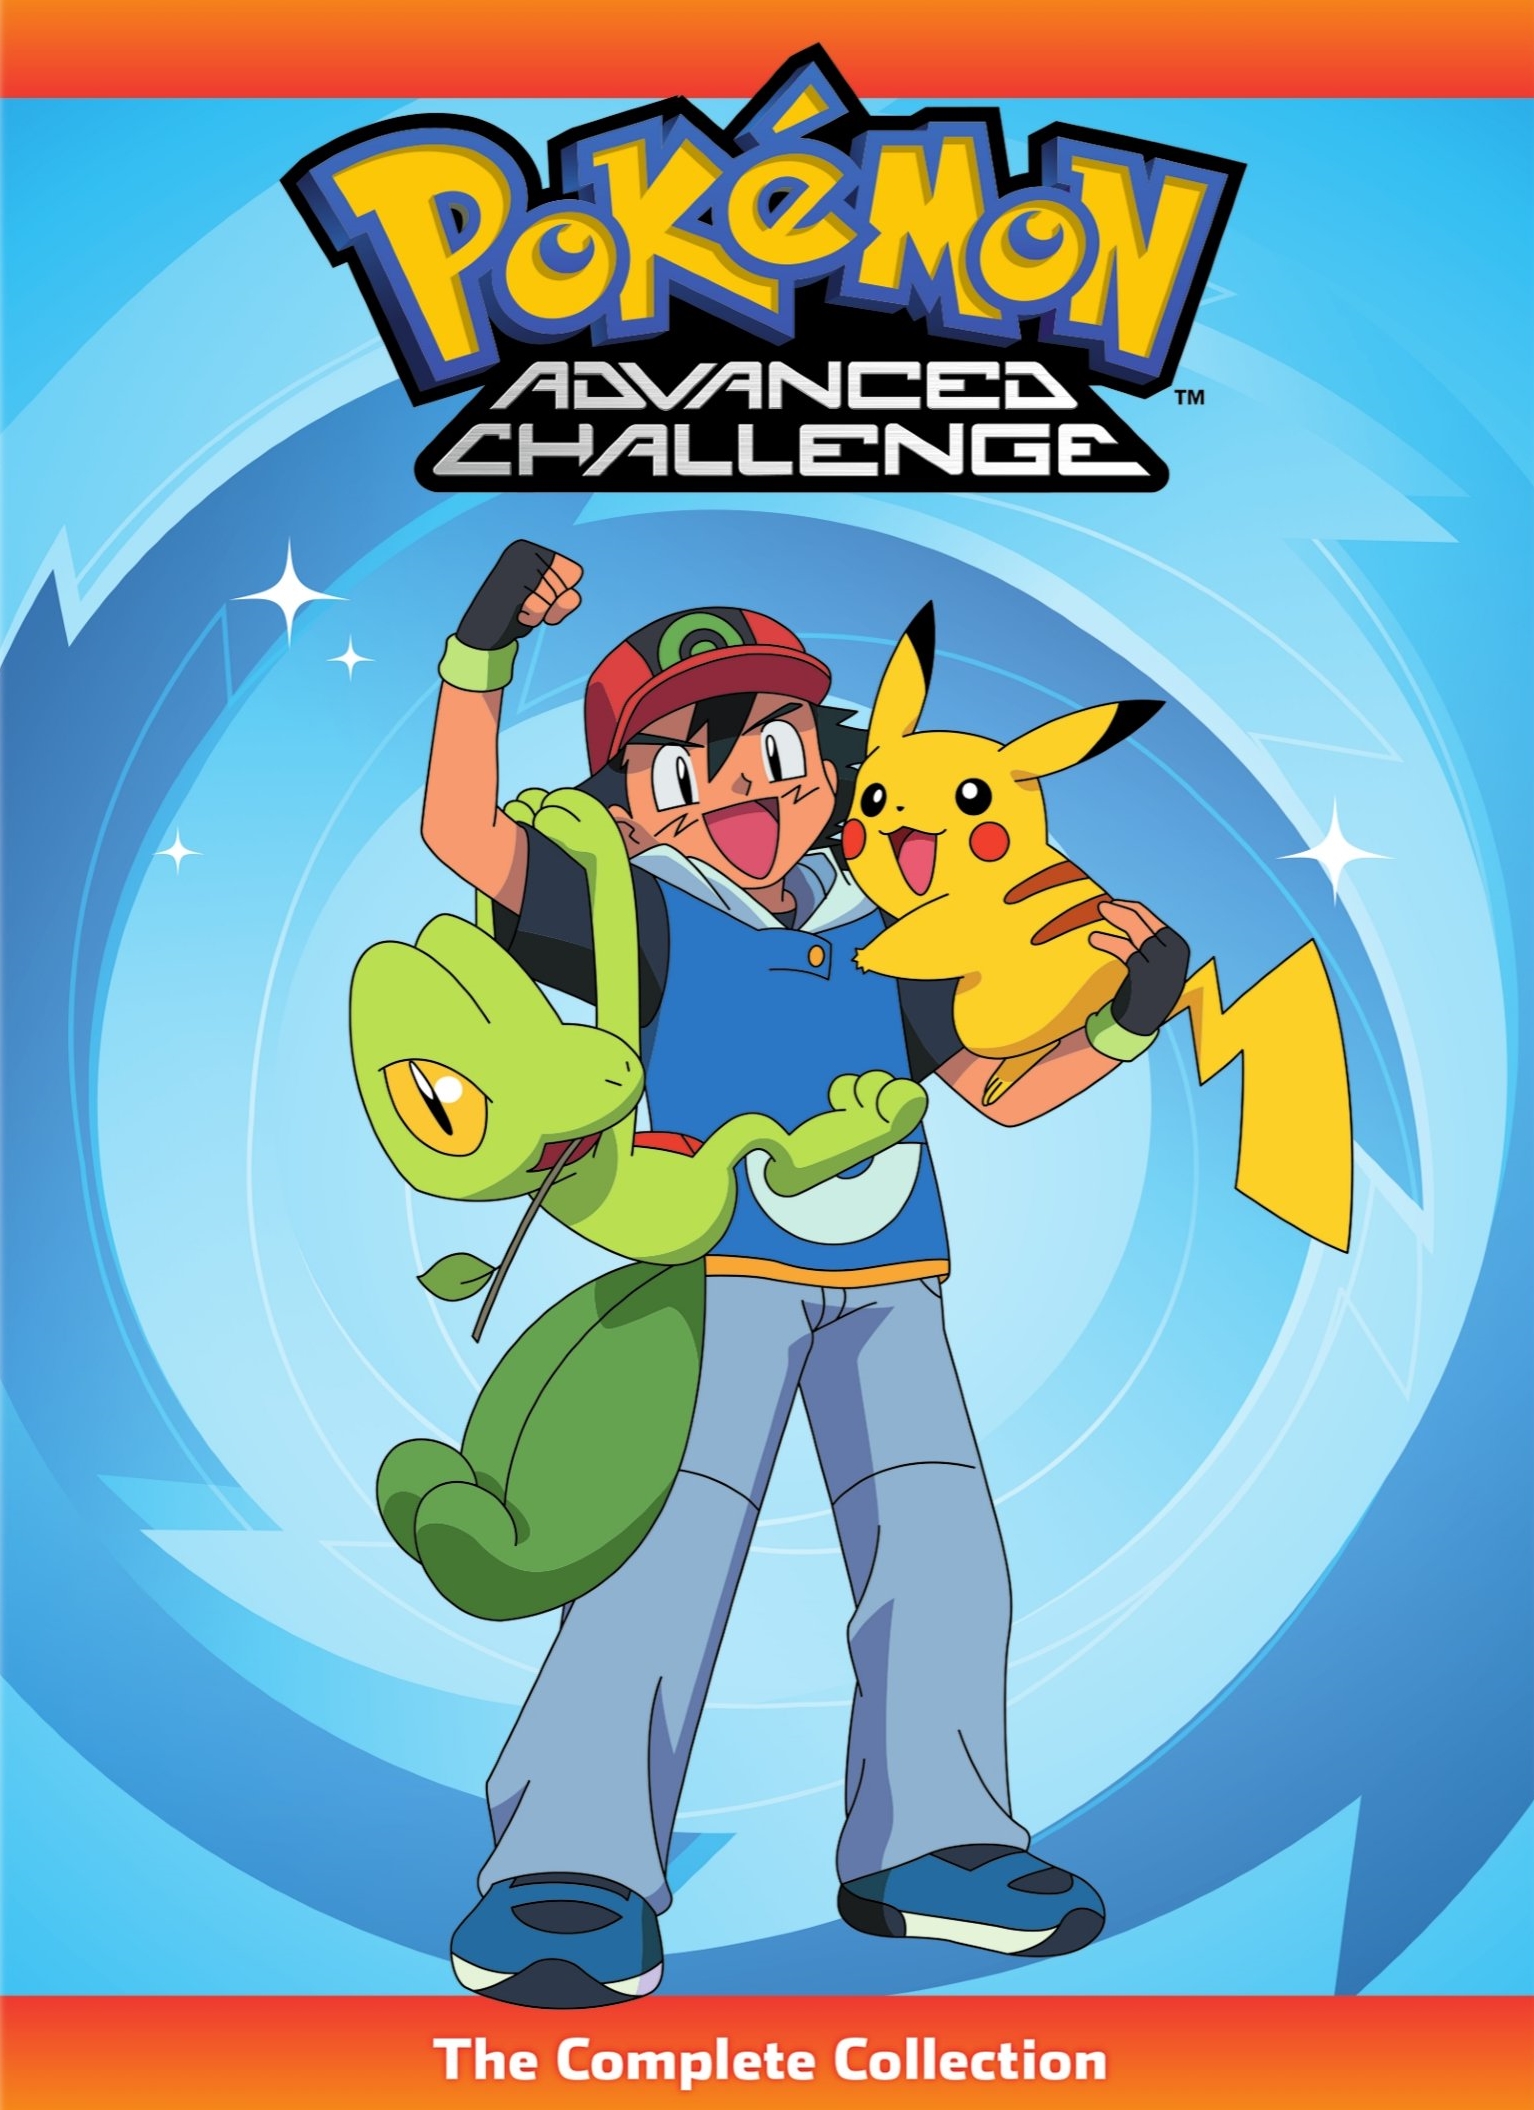 Pokémon the Movie: Genesect and the Legend Awakened (2013) - IMDb